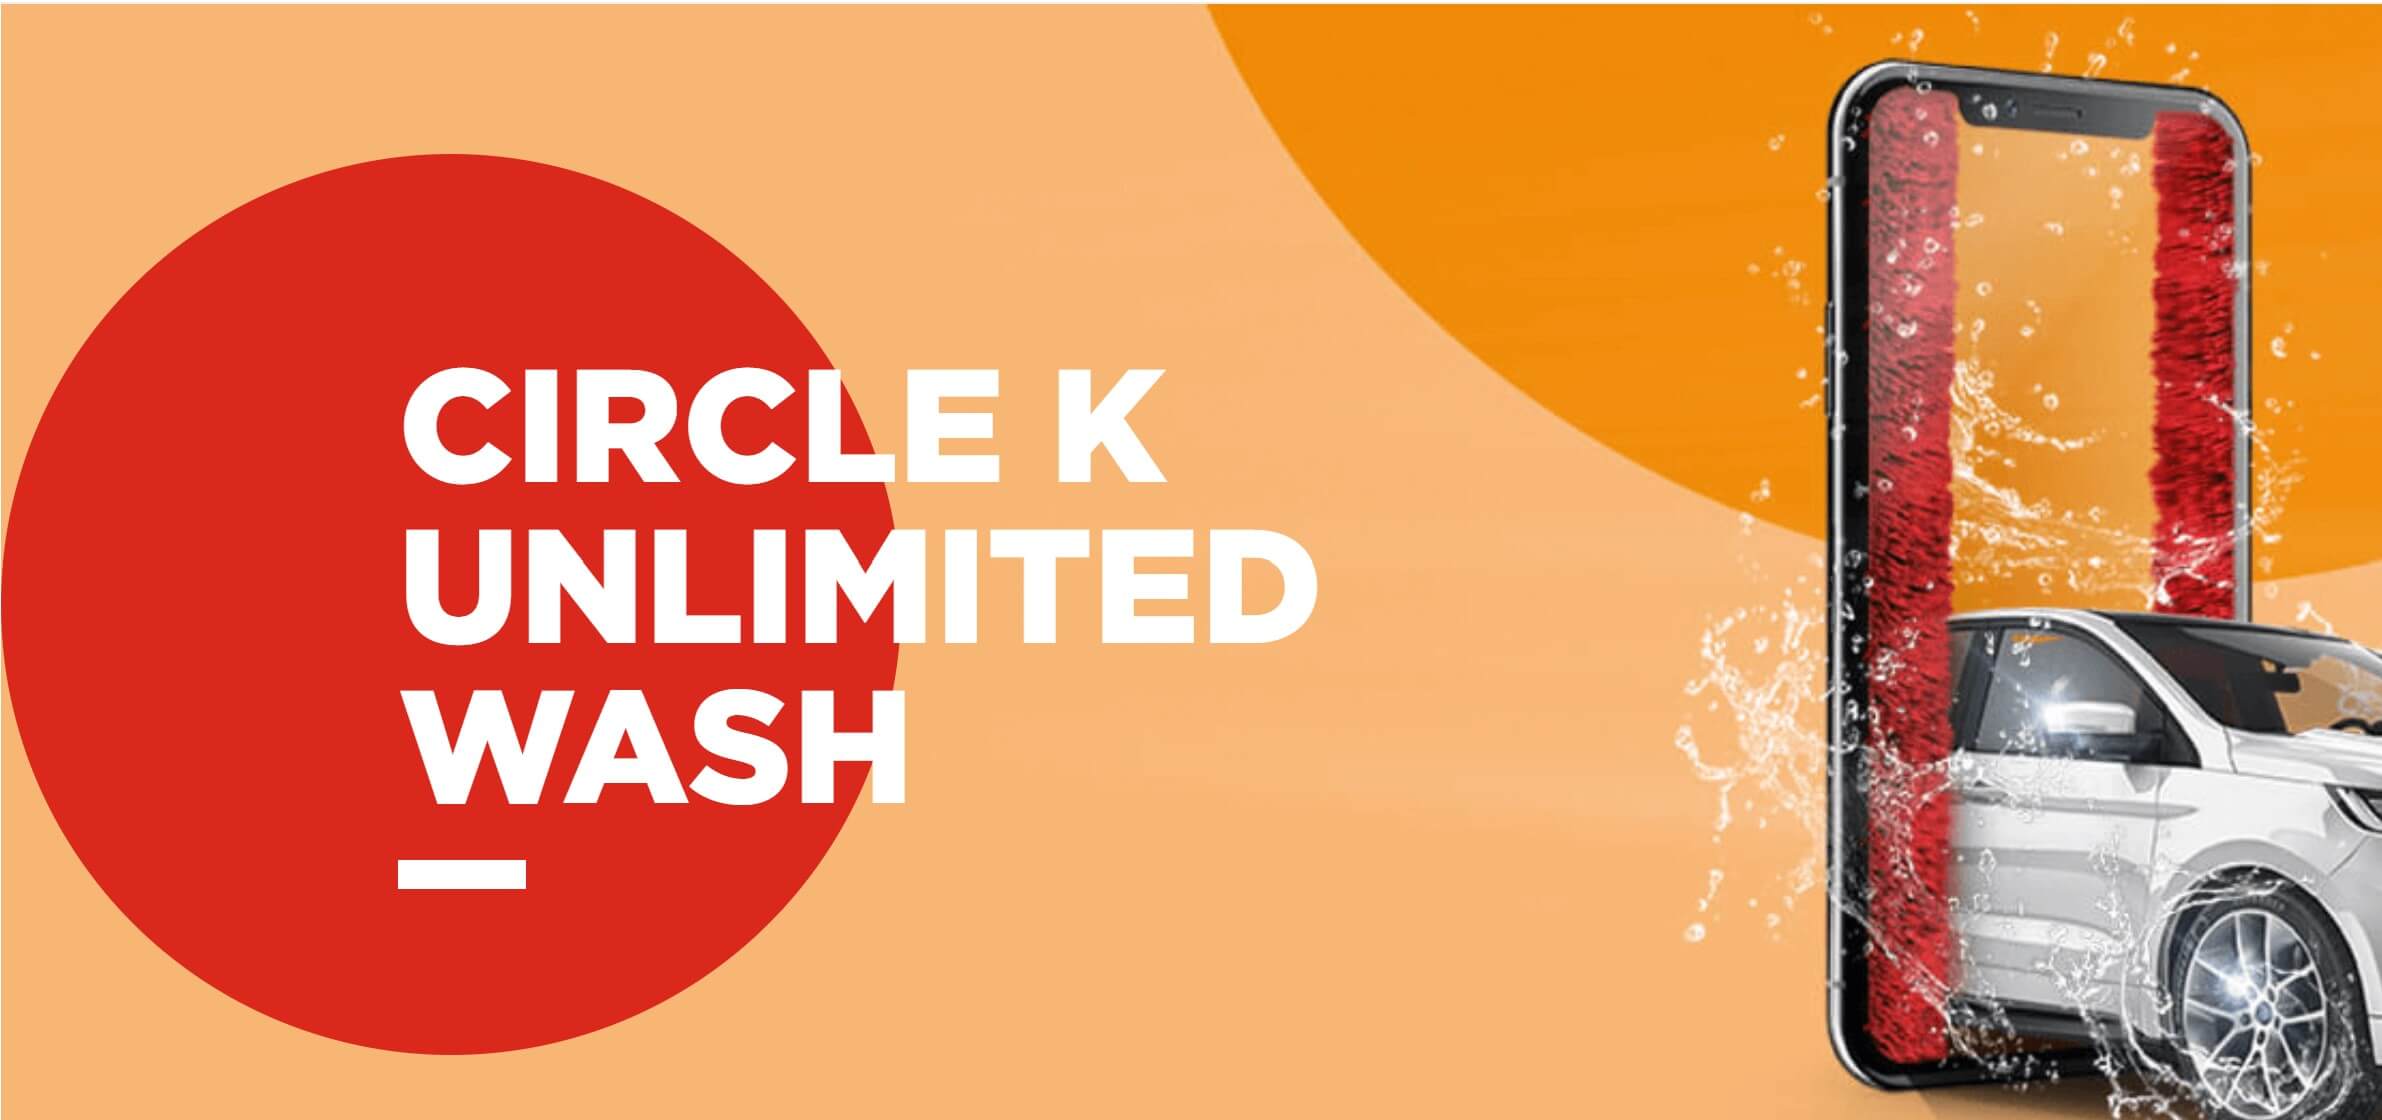 Unlimited Wash Circle K